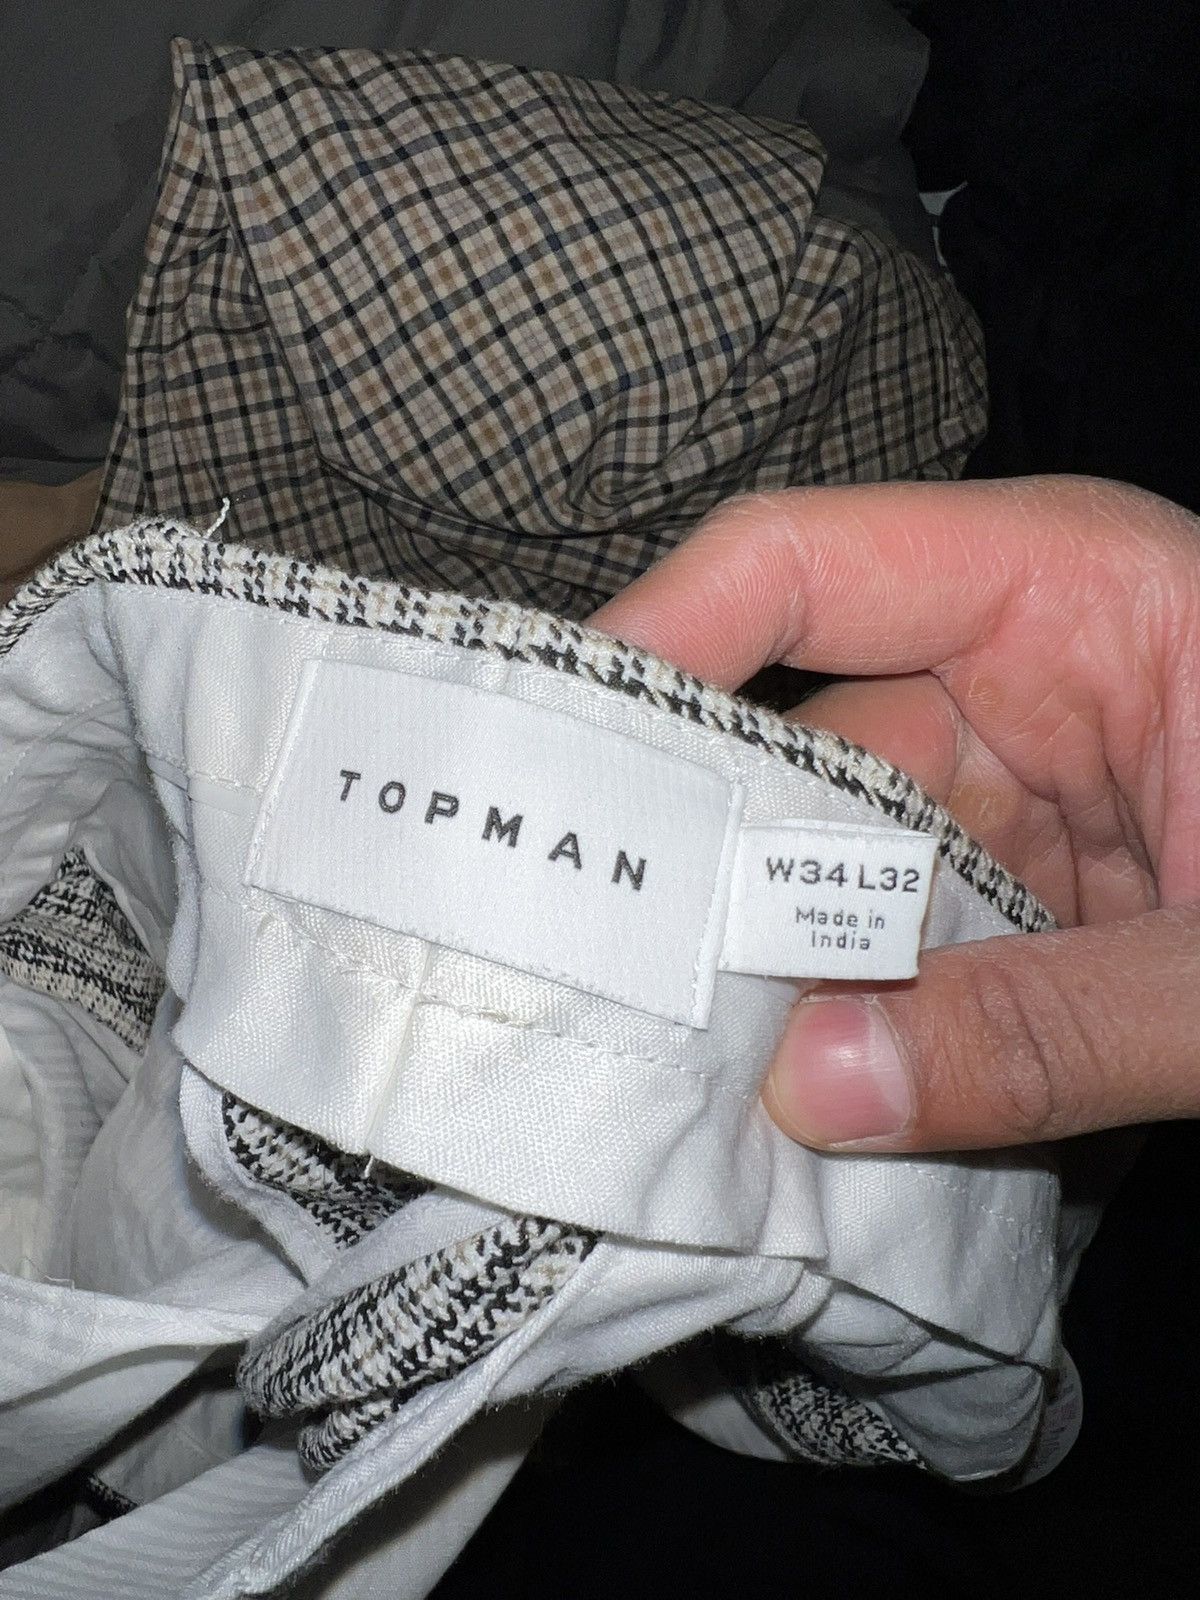 Topman 34x32 Topman Slacks Size US 34 / EU 50 - 4 Thumbnail